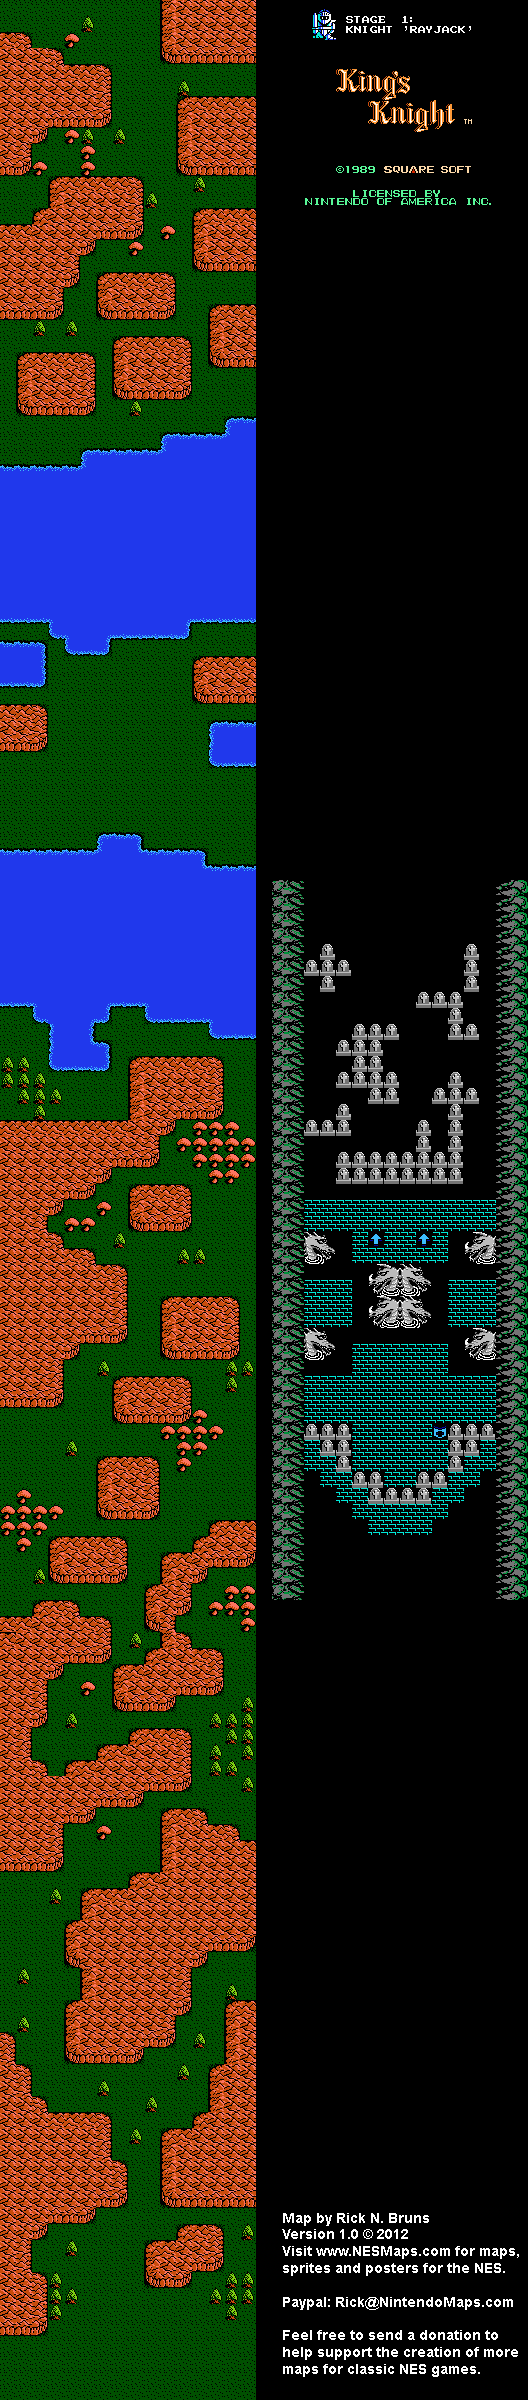 King's Knight - Stage 1 - Nintendo NES Map BG